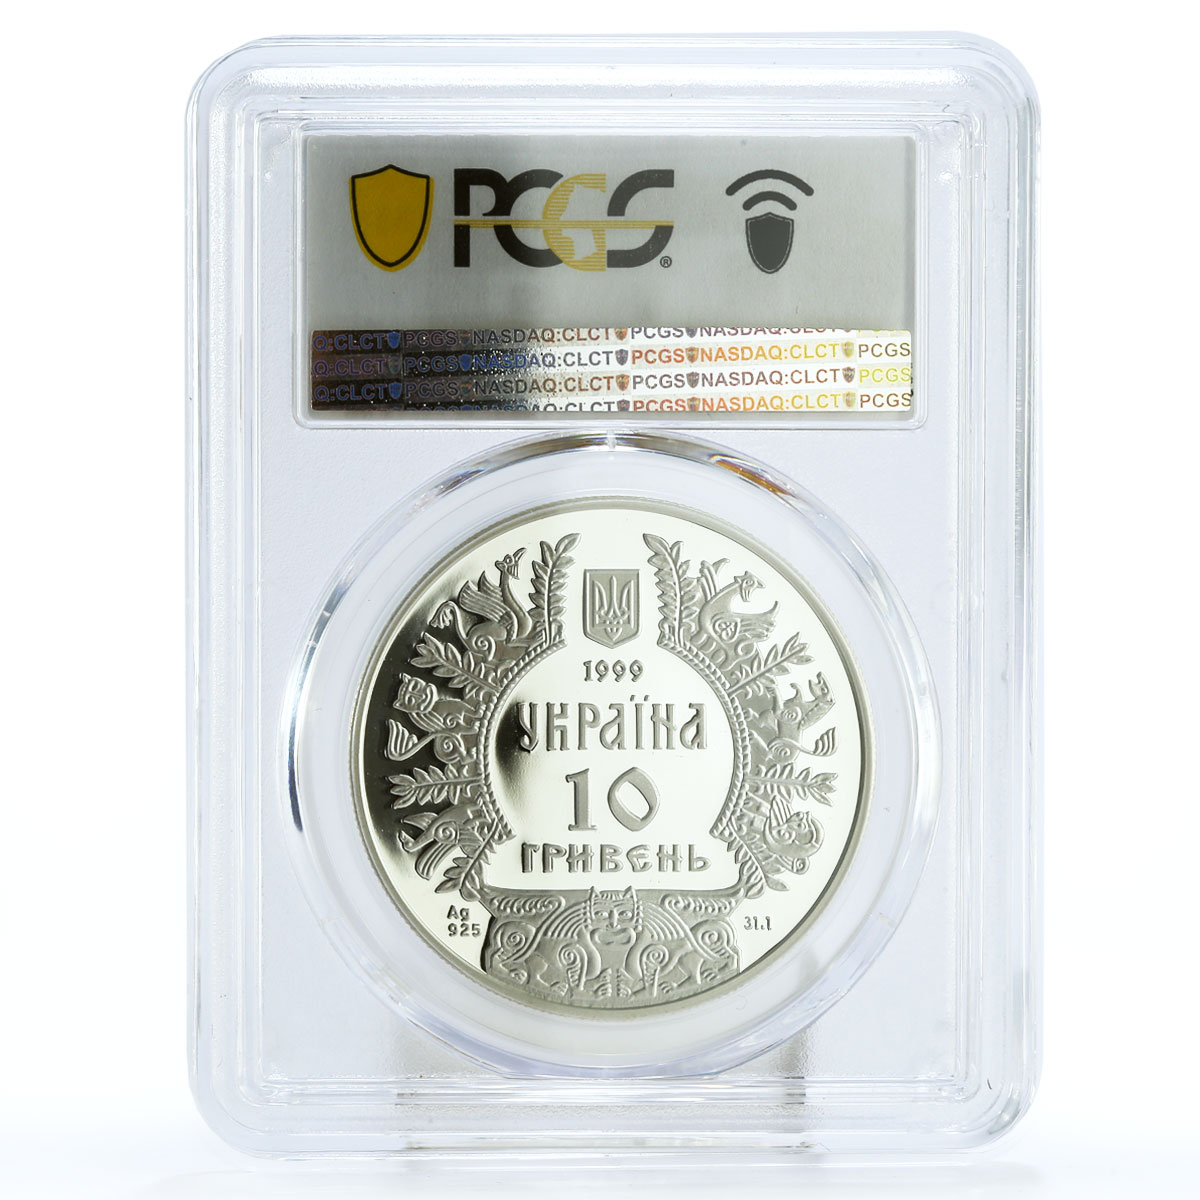 Ukraine 10 hryvnias Prince Askold Kyiv State Ruler PR70 PCGS silver coin 1999